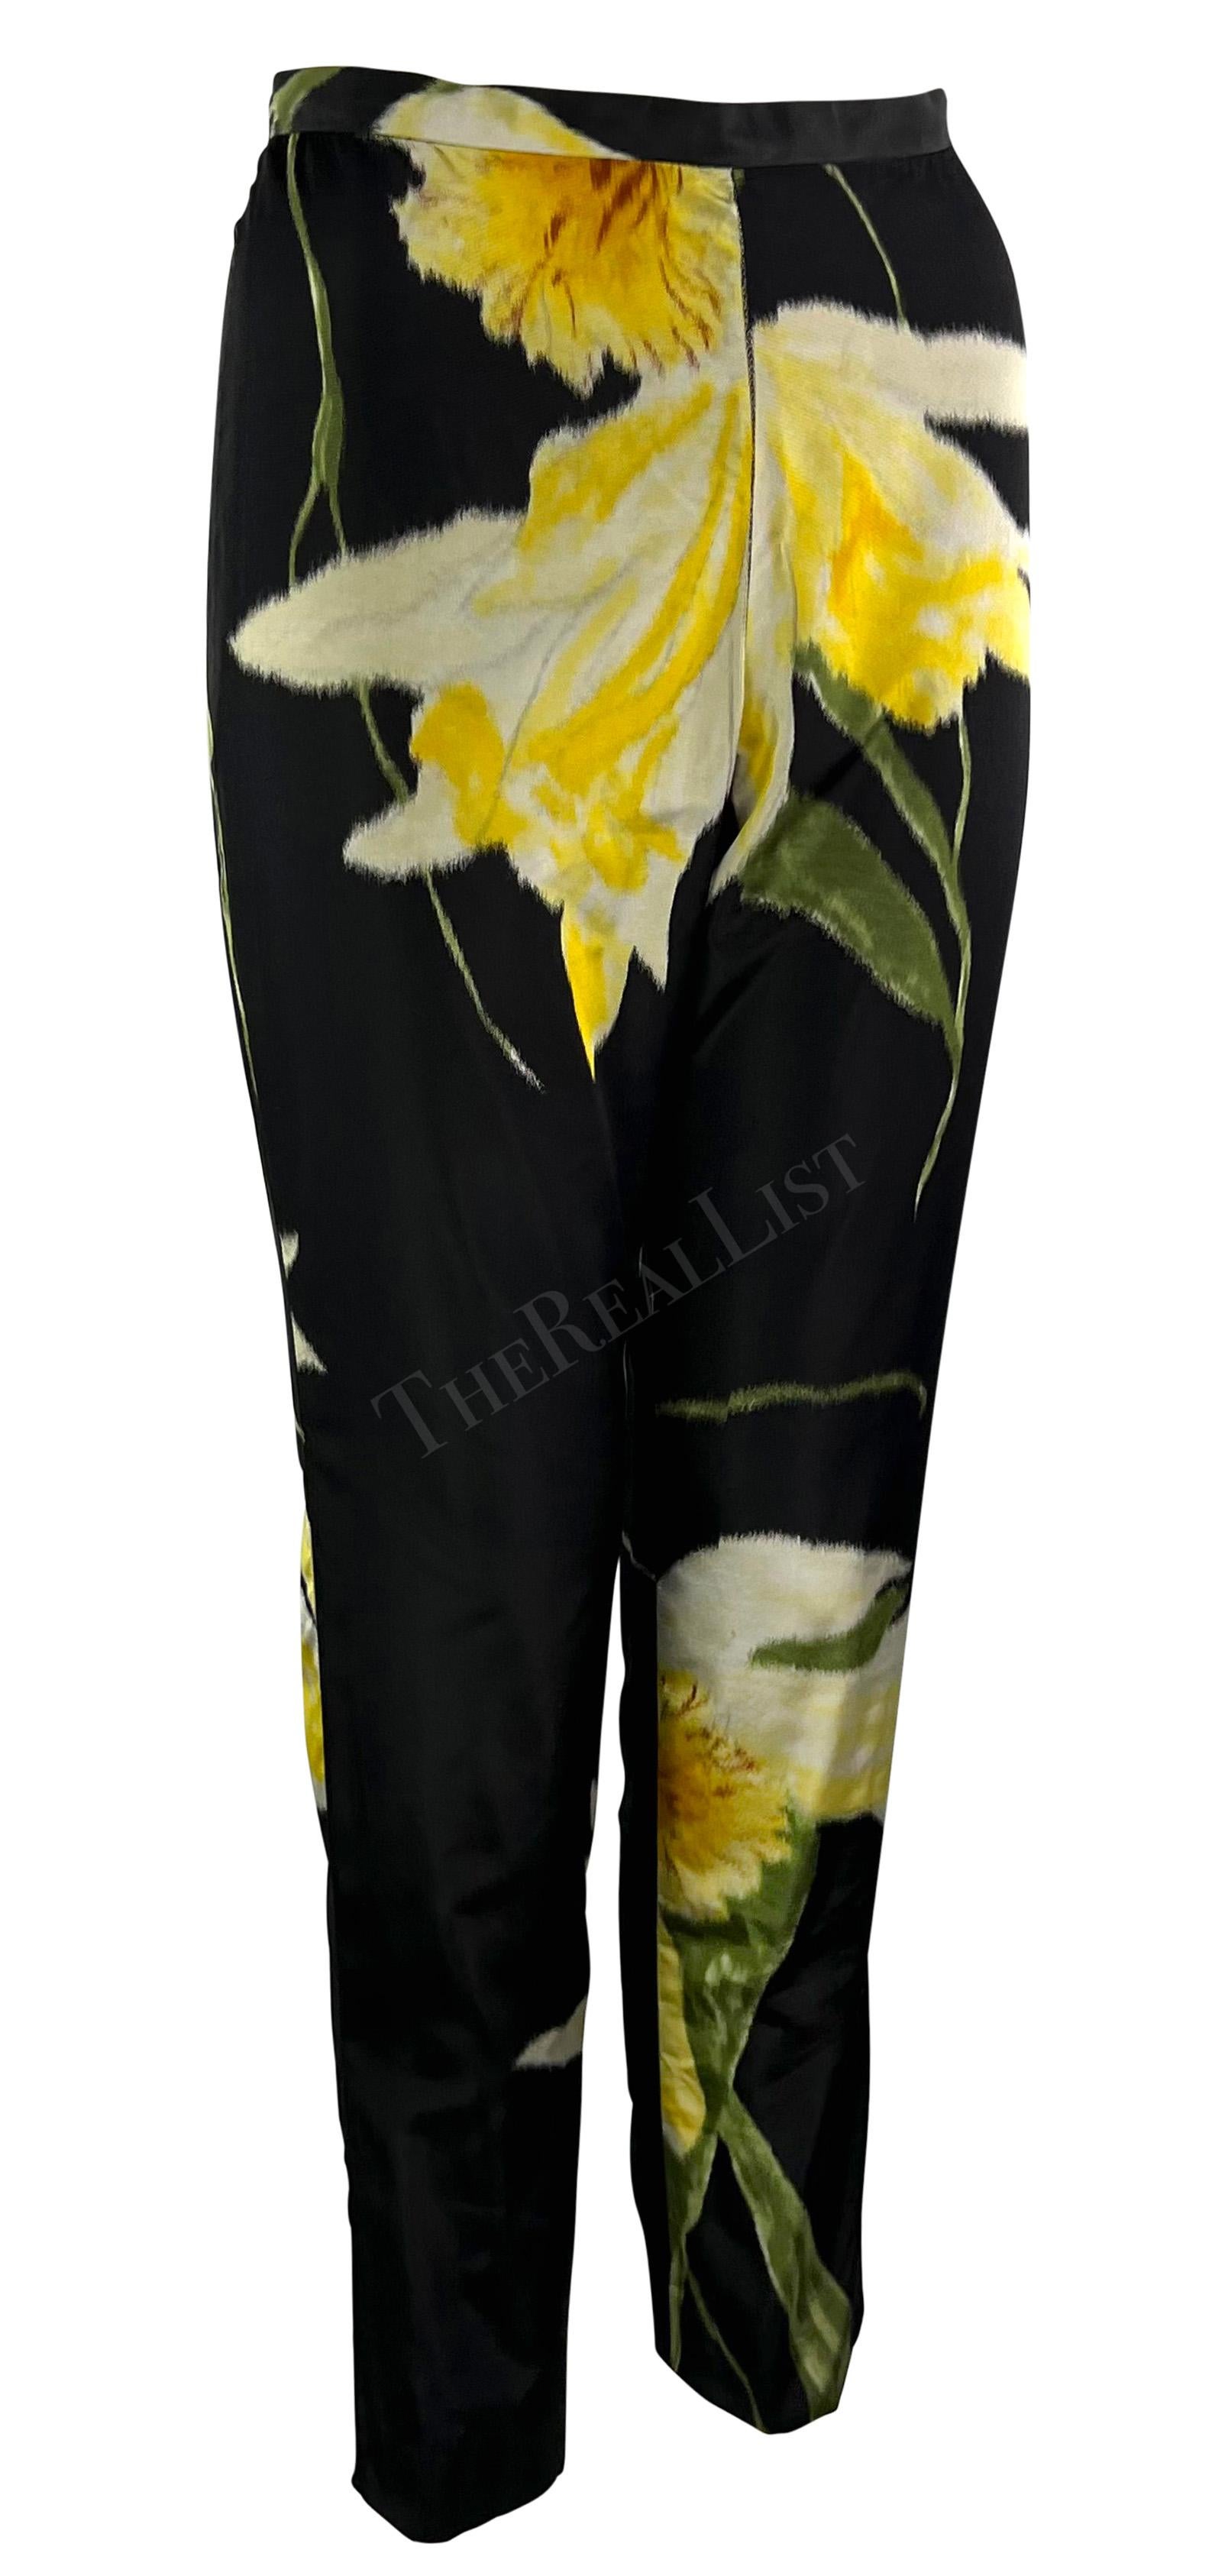 S/S 2000 Ralph Lauren Runway Black Silk Taffeta Yellow Floral Cigarette Pants For Sale 5